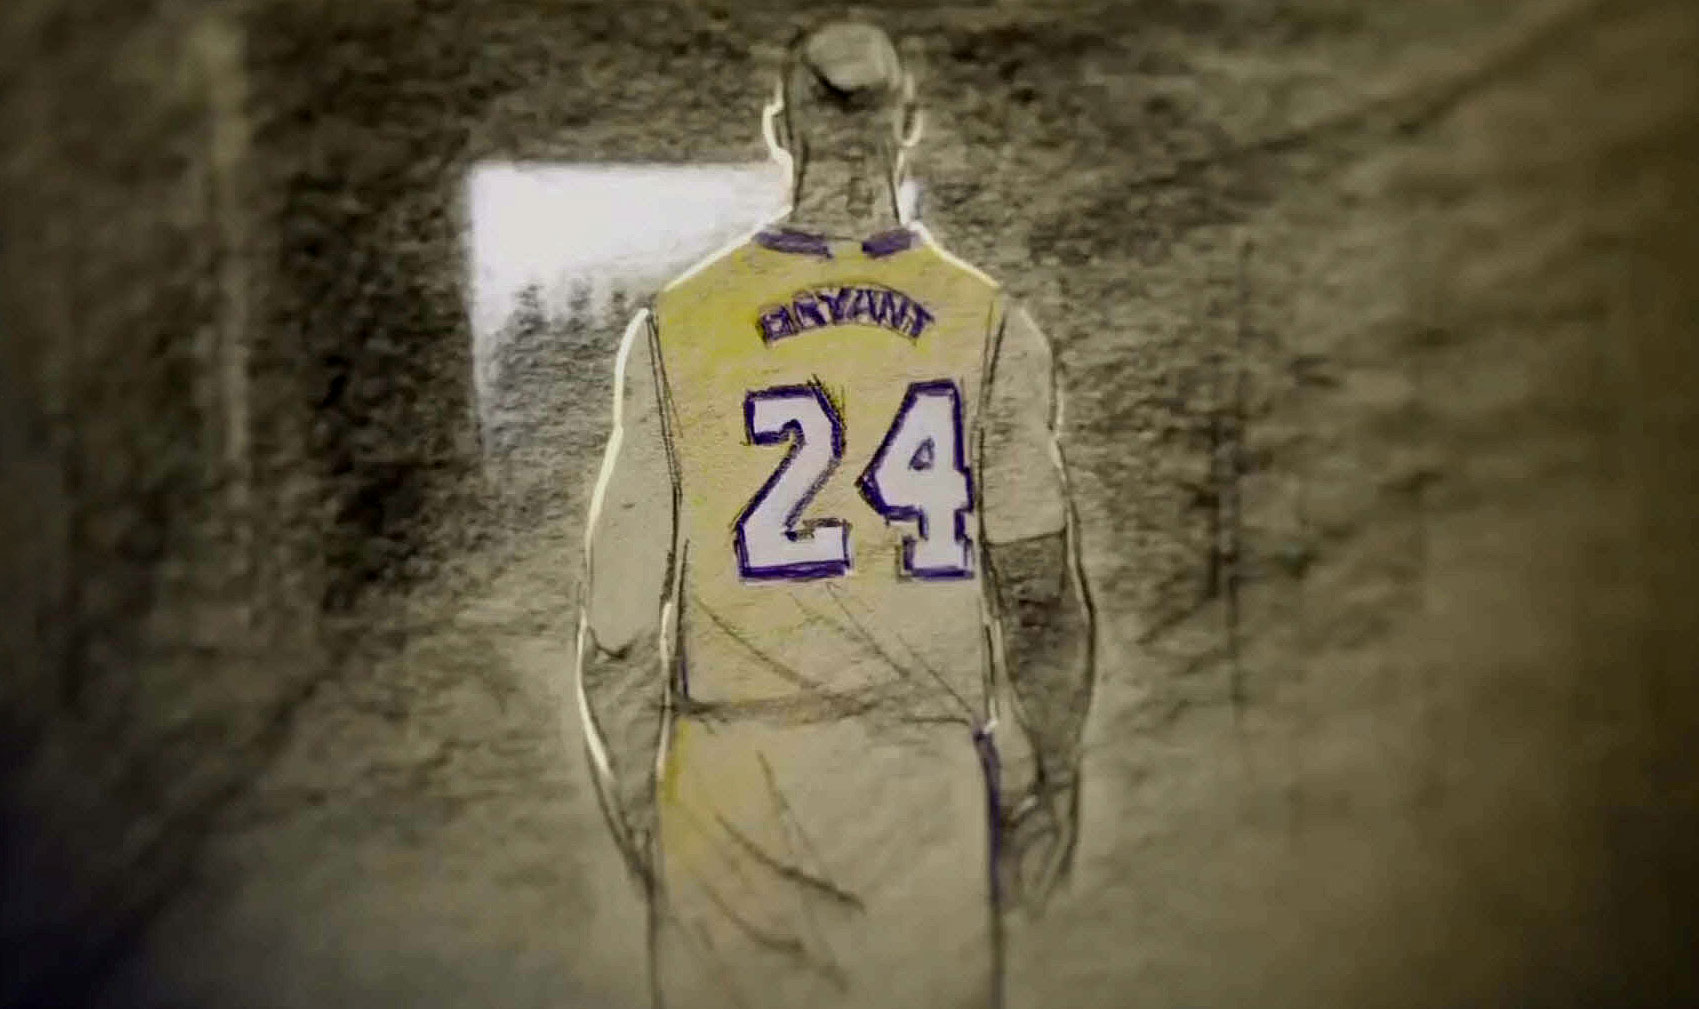 WATCH] Kobe Bryant's incredible, Oscar-winning 'Dear Basketball' animation